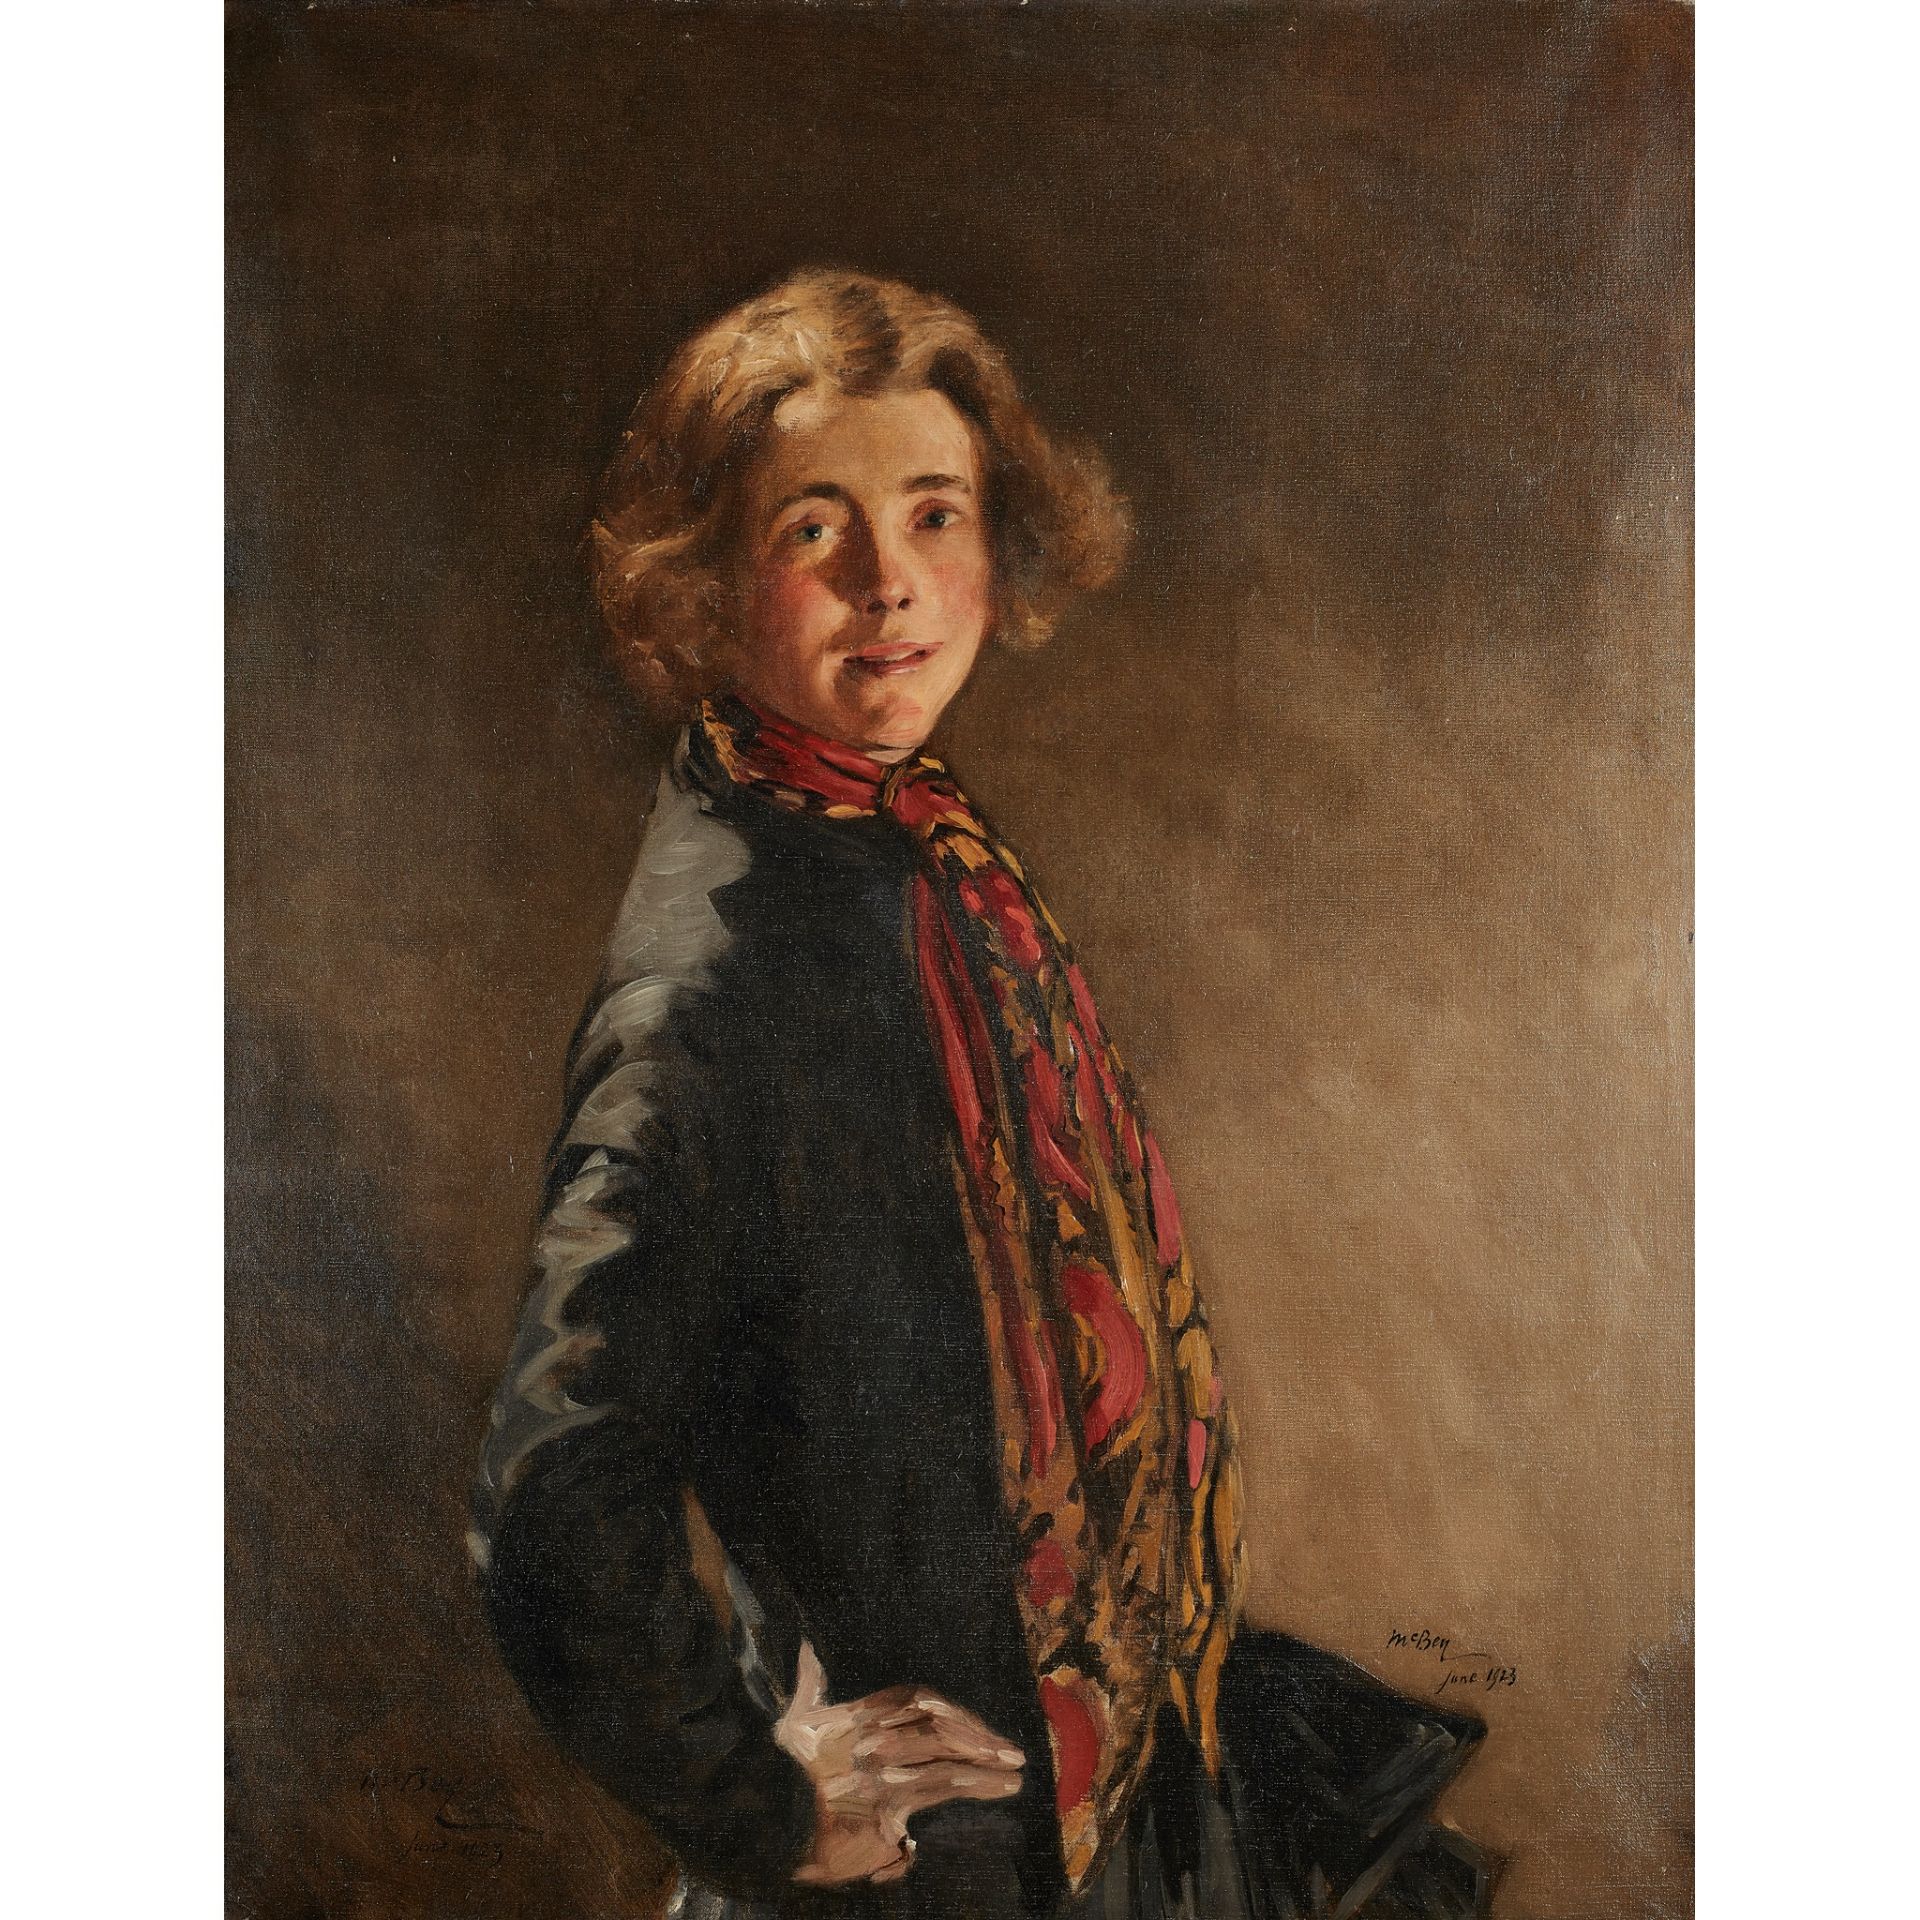 § JAMES MCBEY (SCOTTISH 1883-1959) PORTRAIT OF MRS ELIZABETH GRANT MURRAY "THE RED SCARF"